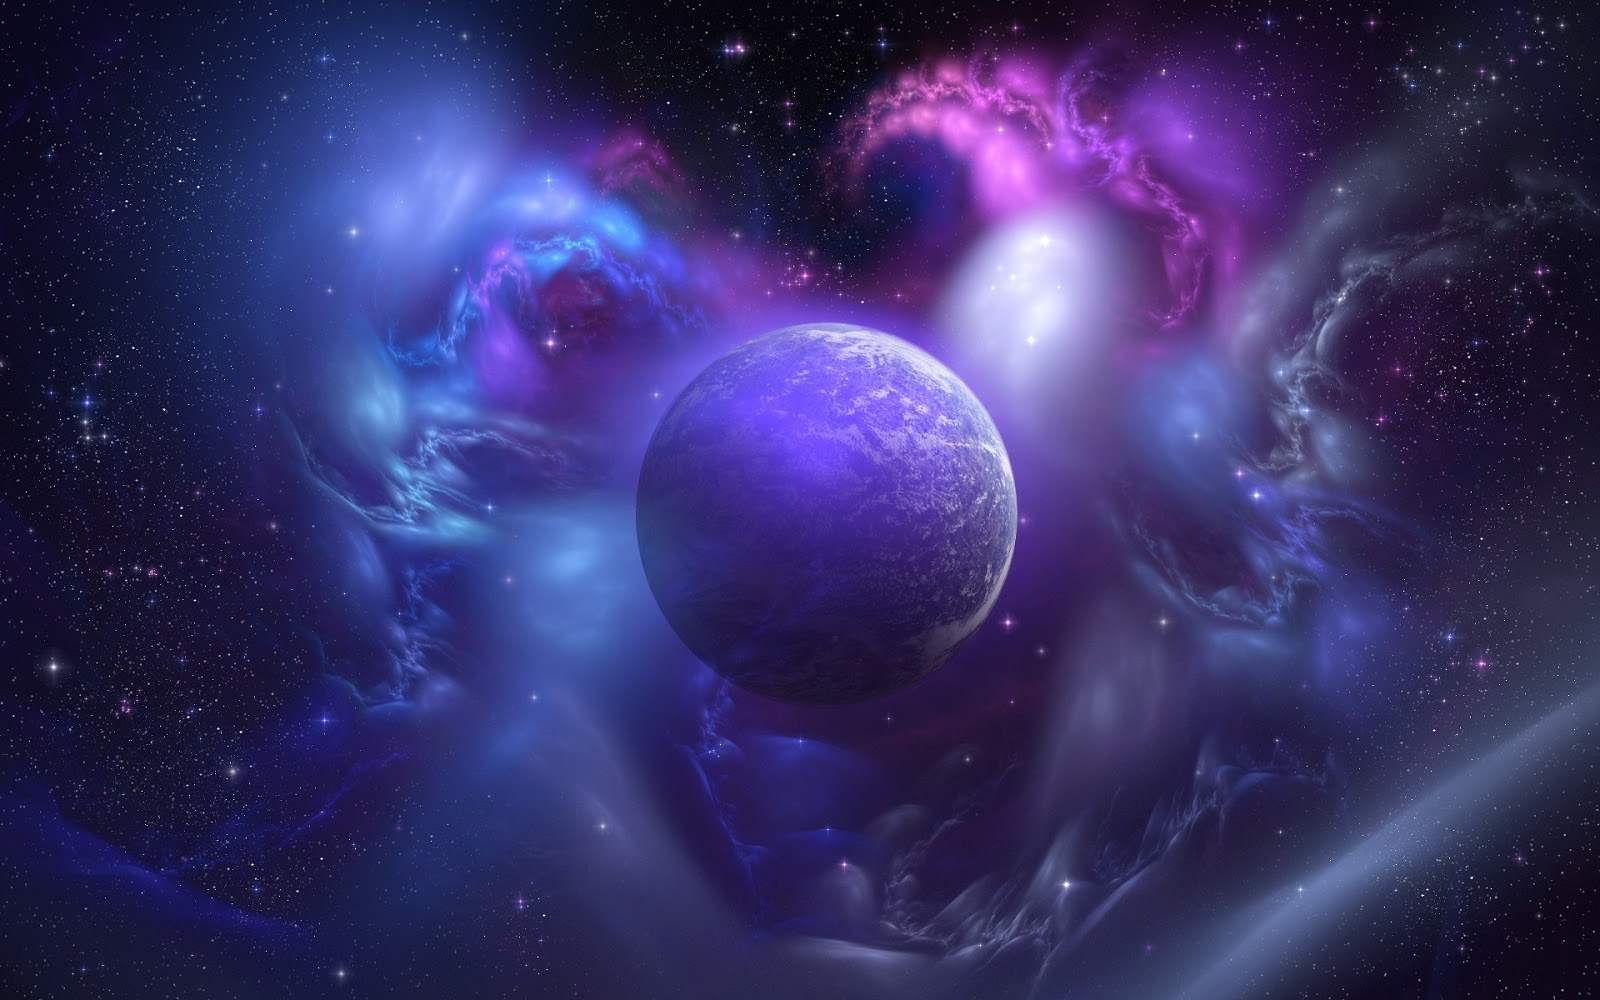 4k Wallpaper For Pc - Planets Inside A Nebula - HD Wallpaper 